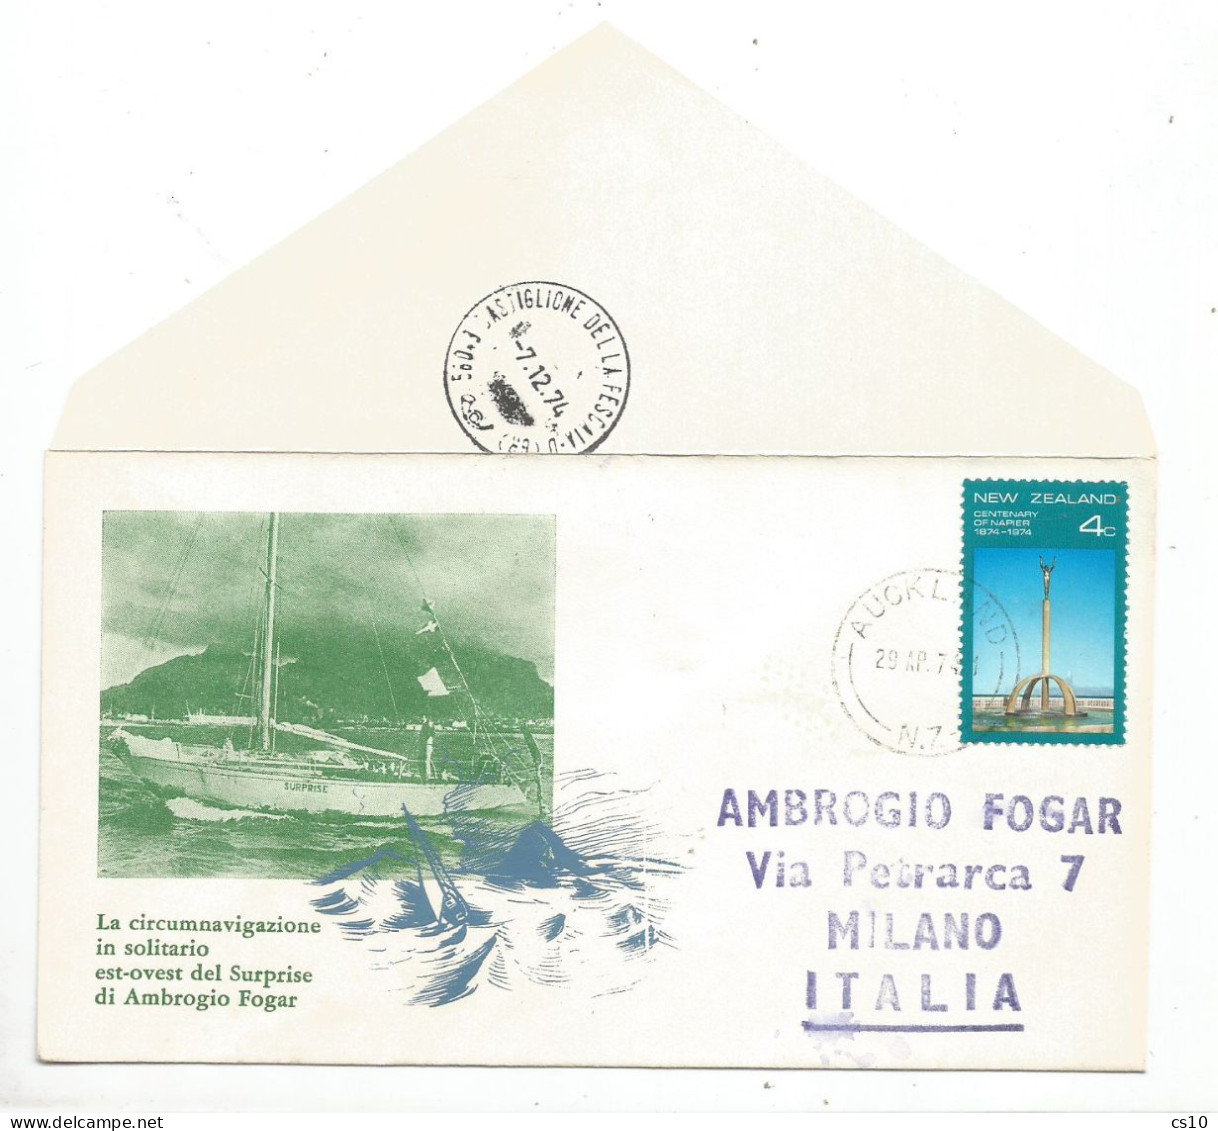 Vela Sailing SOLO Circumnavigation - Ambrogio Fogar On Surprise Yacht - Official CV Auckland 29apr1974 X Italy 7dec74 - Sailing